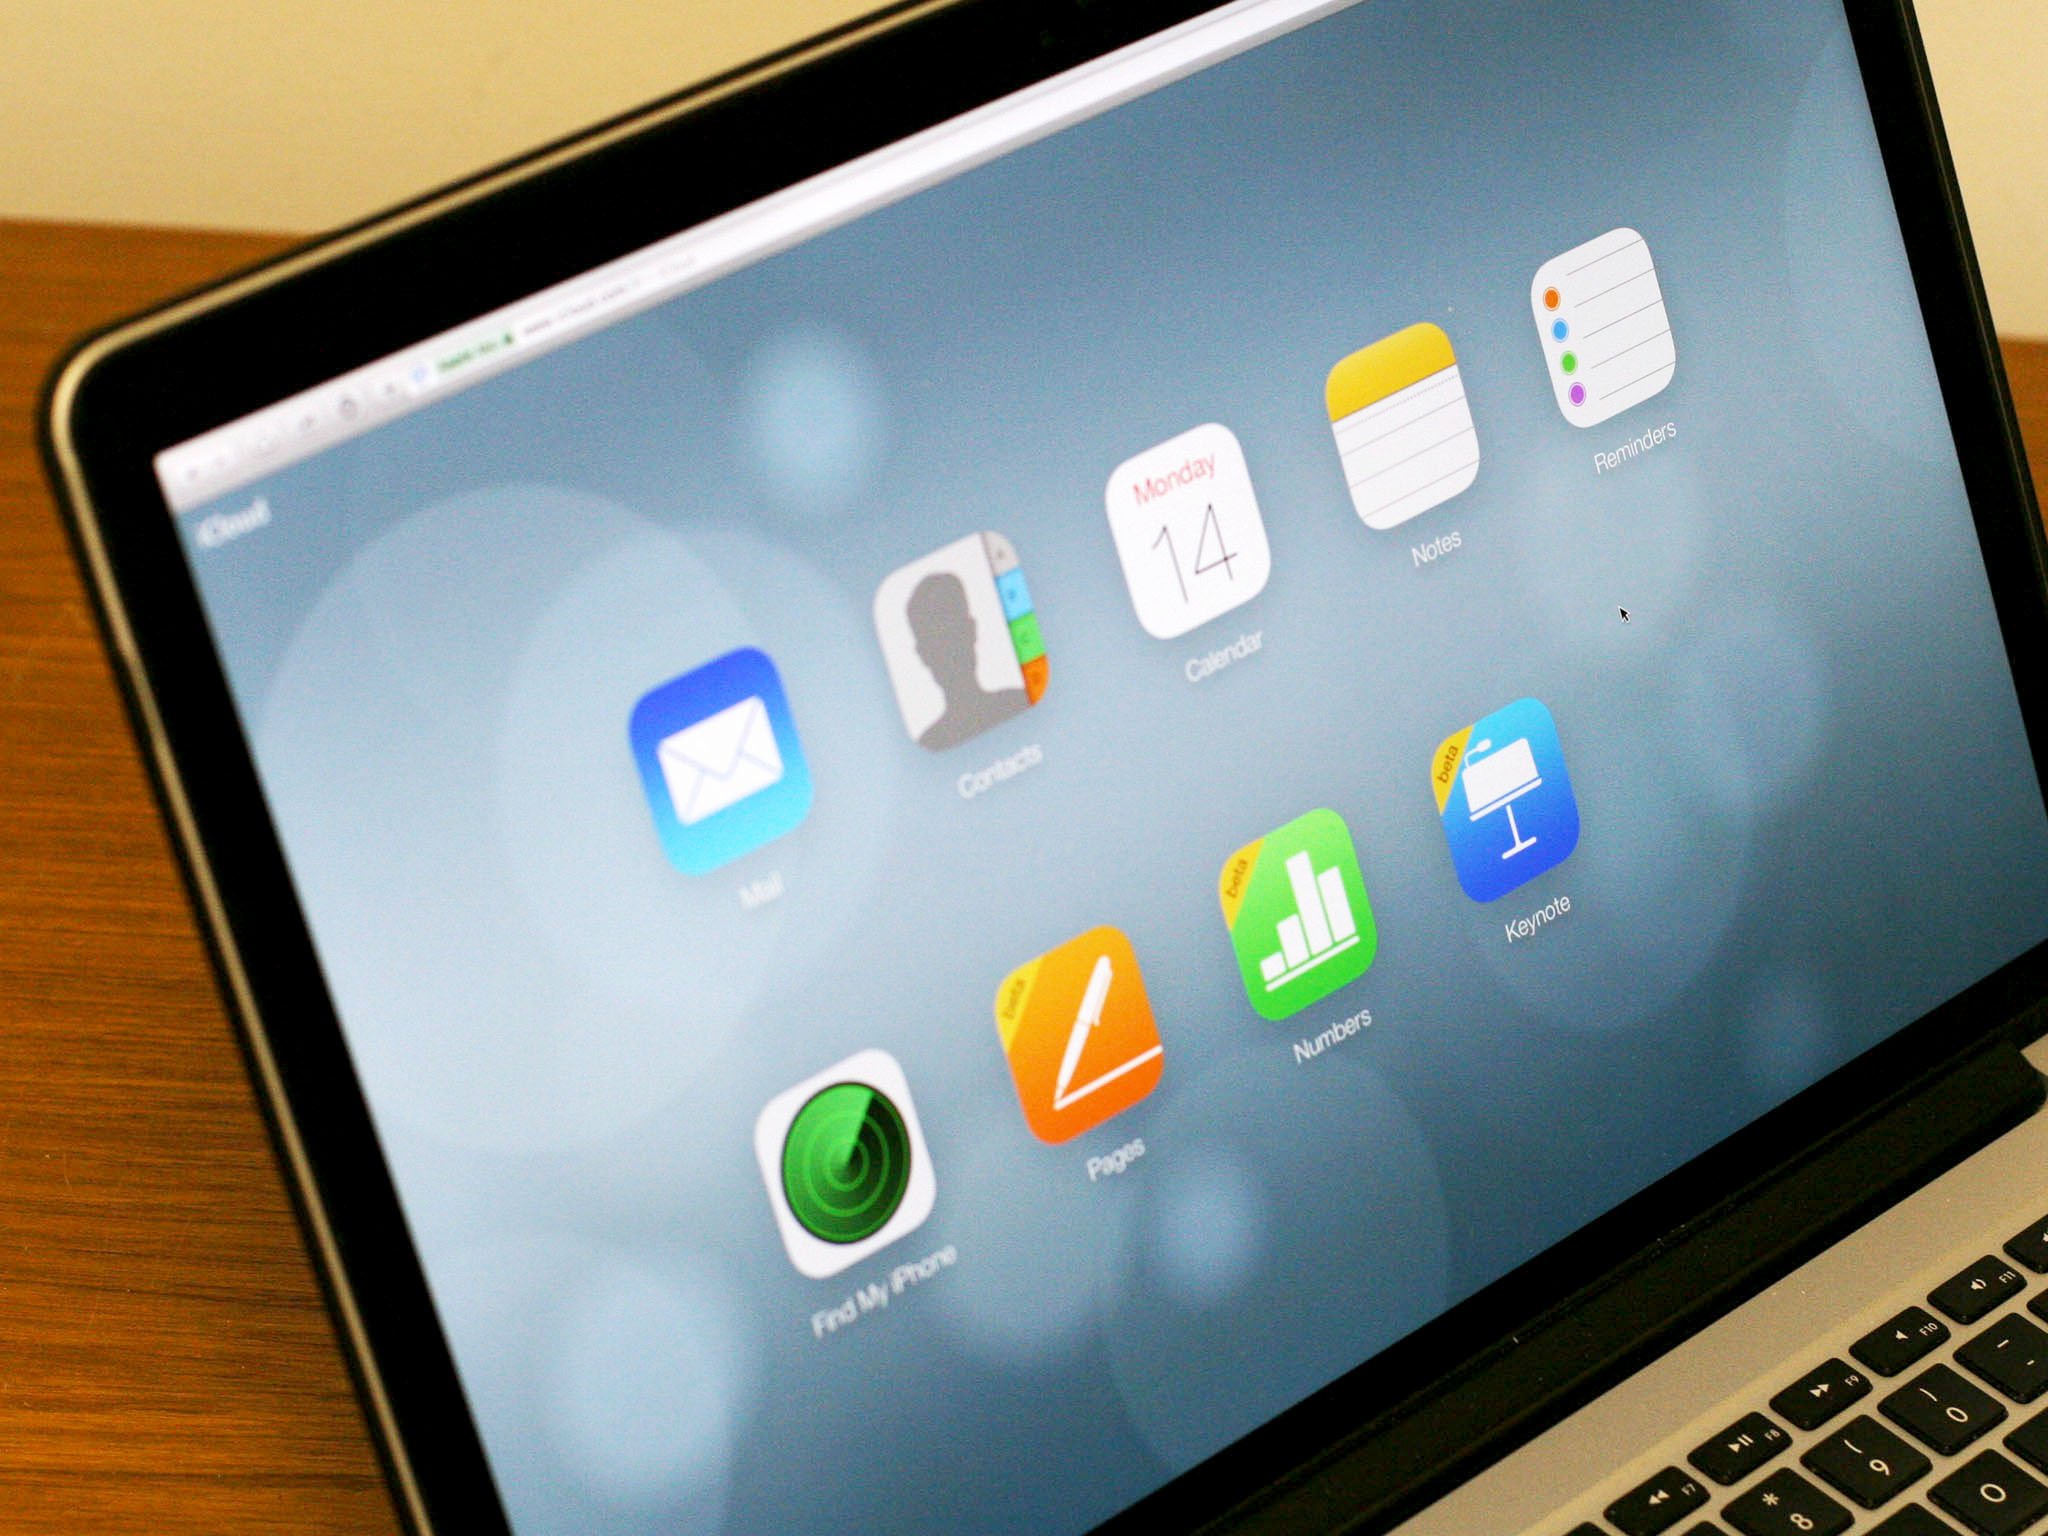 iCloud apps on a MacBook Pro